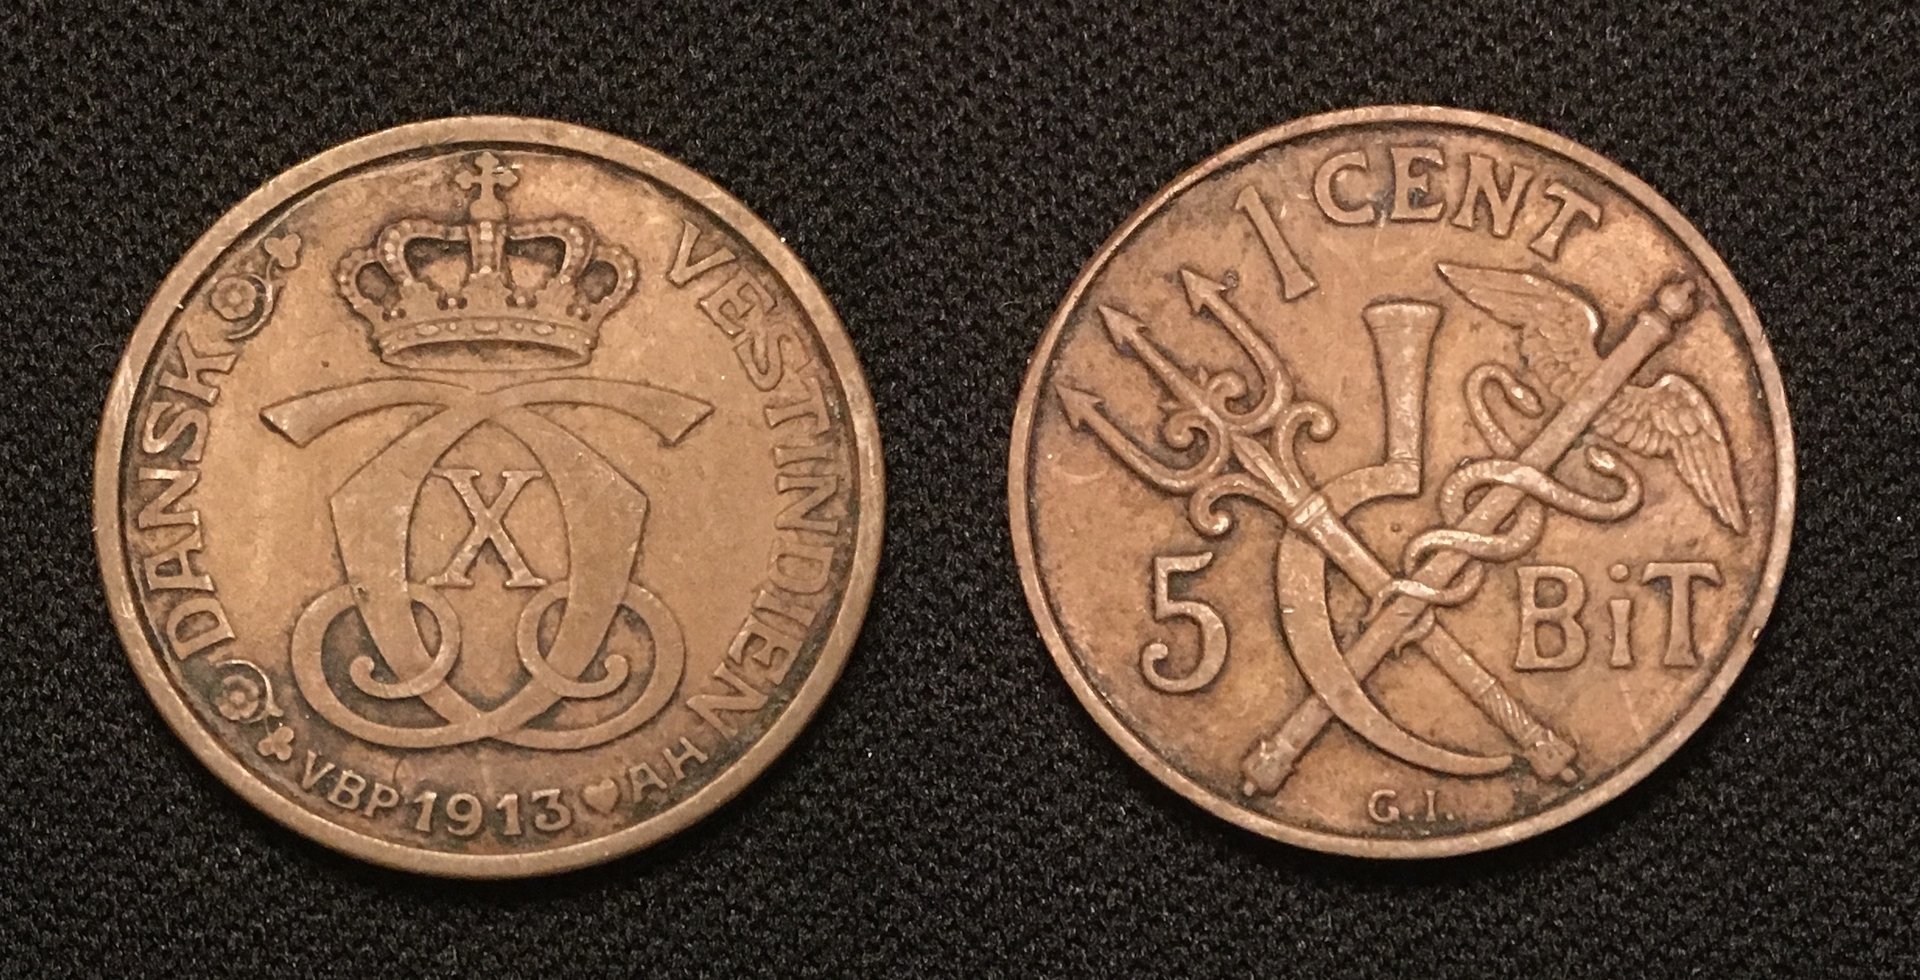 1913 1 Cent 5 Bit Combined.jpg